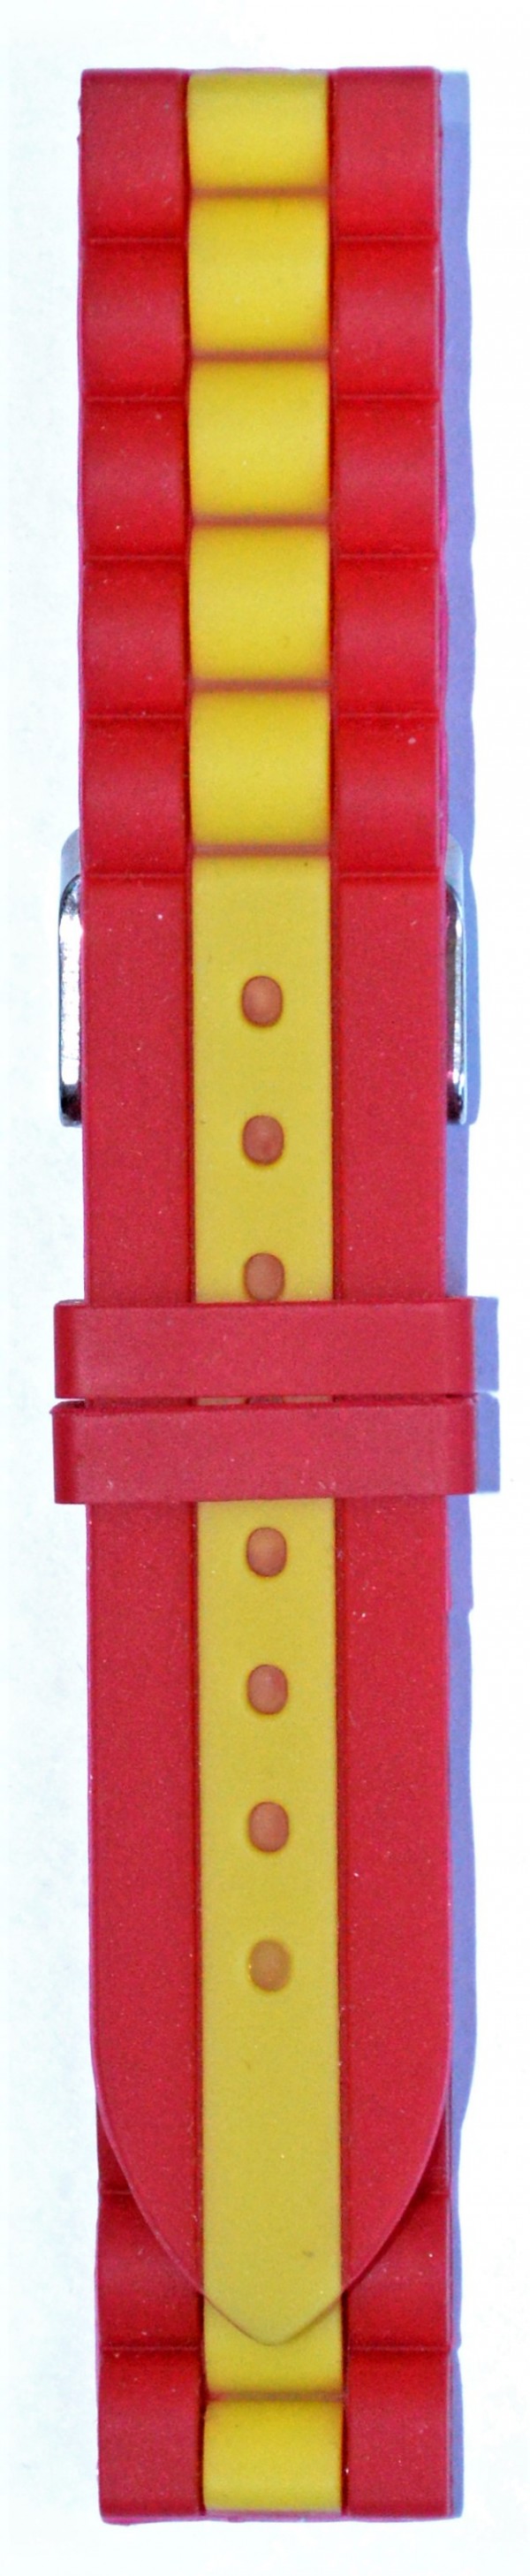 Silikonski kaiš - SK 20.31 Crveno-Žuta boja 20mm